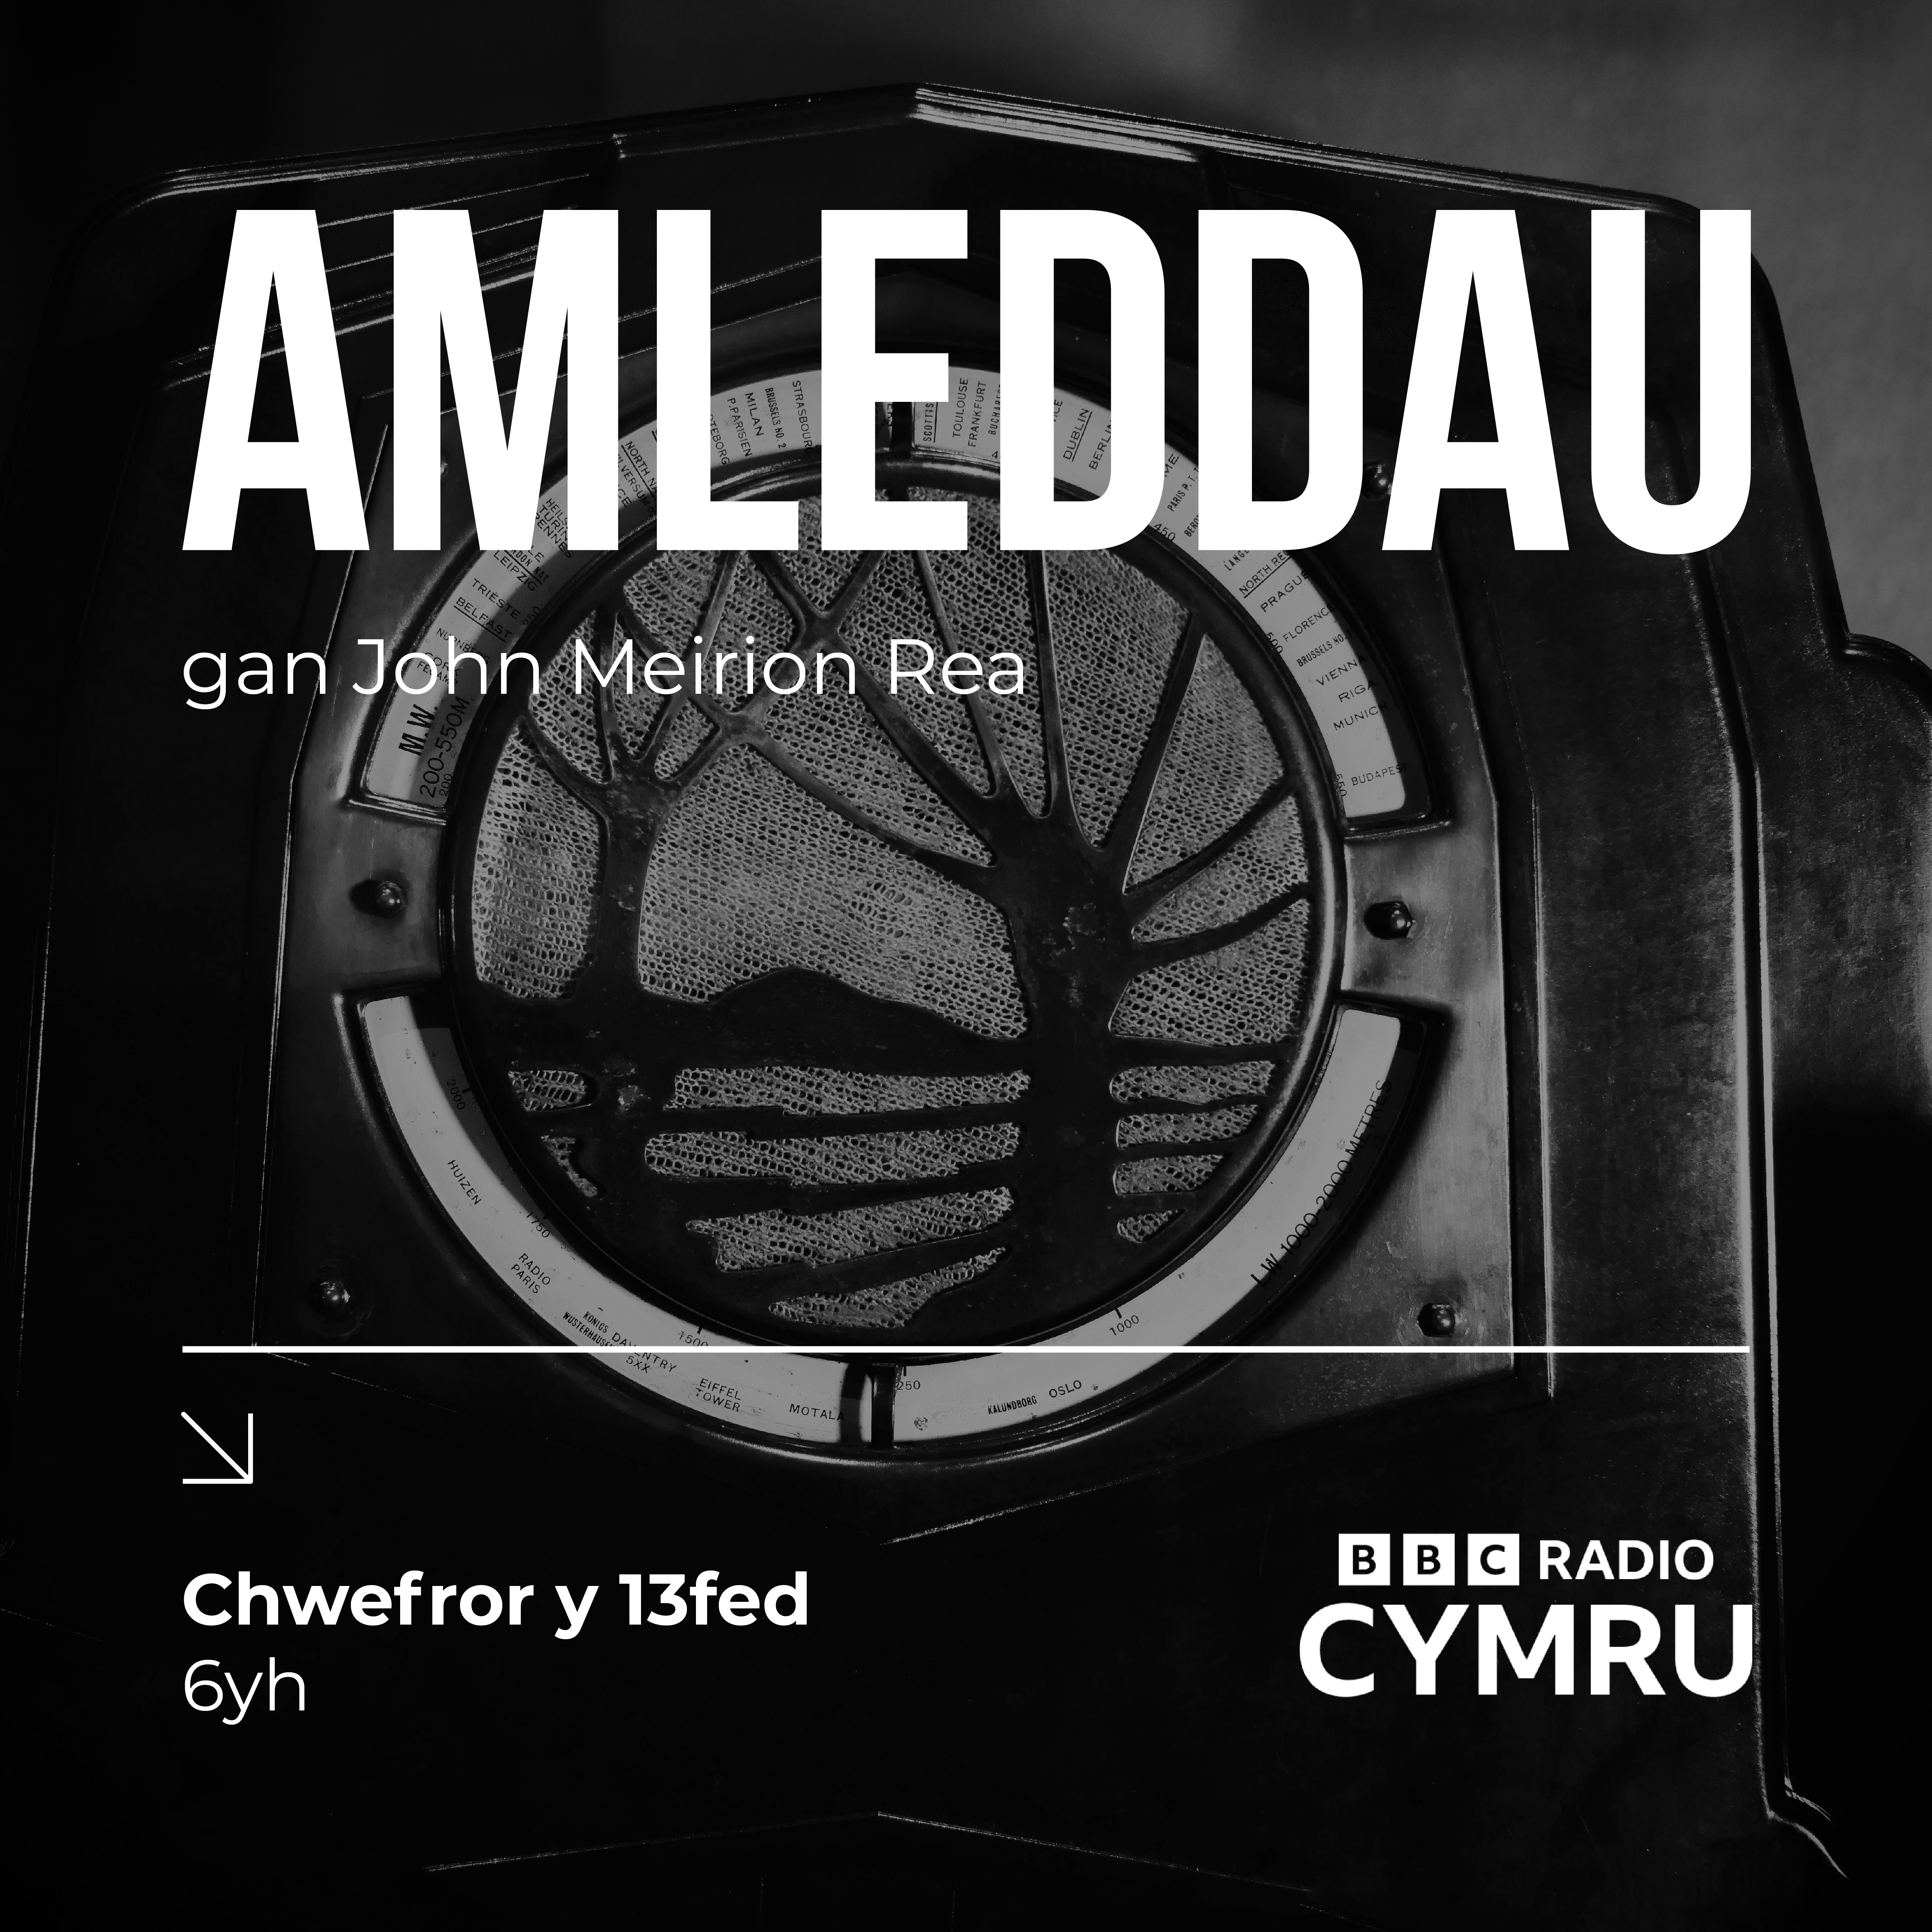 'Amleddau/Frequencies' radio-art work commissioned by BBC Radio Cymru to celebrate the 100th Anniversary of the first Cymraeg ever broadcast in 1923.